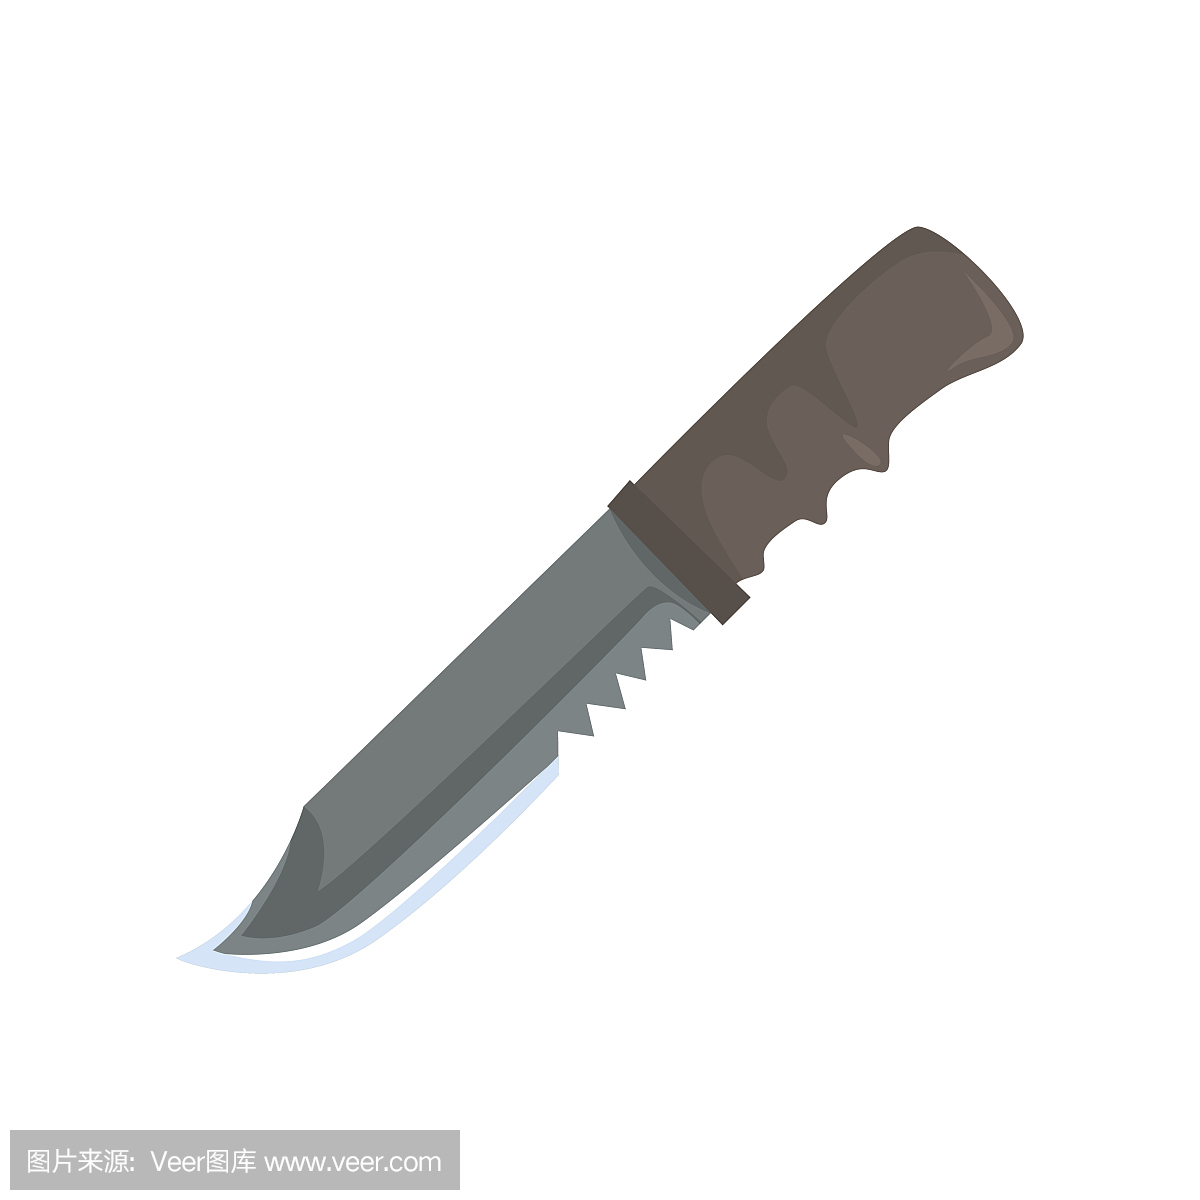 Nonfolding military knife cartoon vector Illustrati